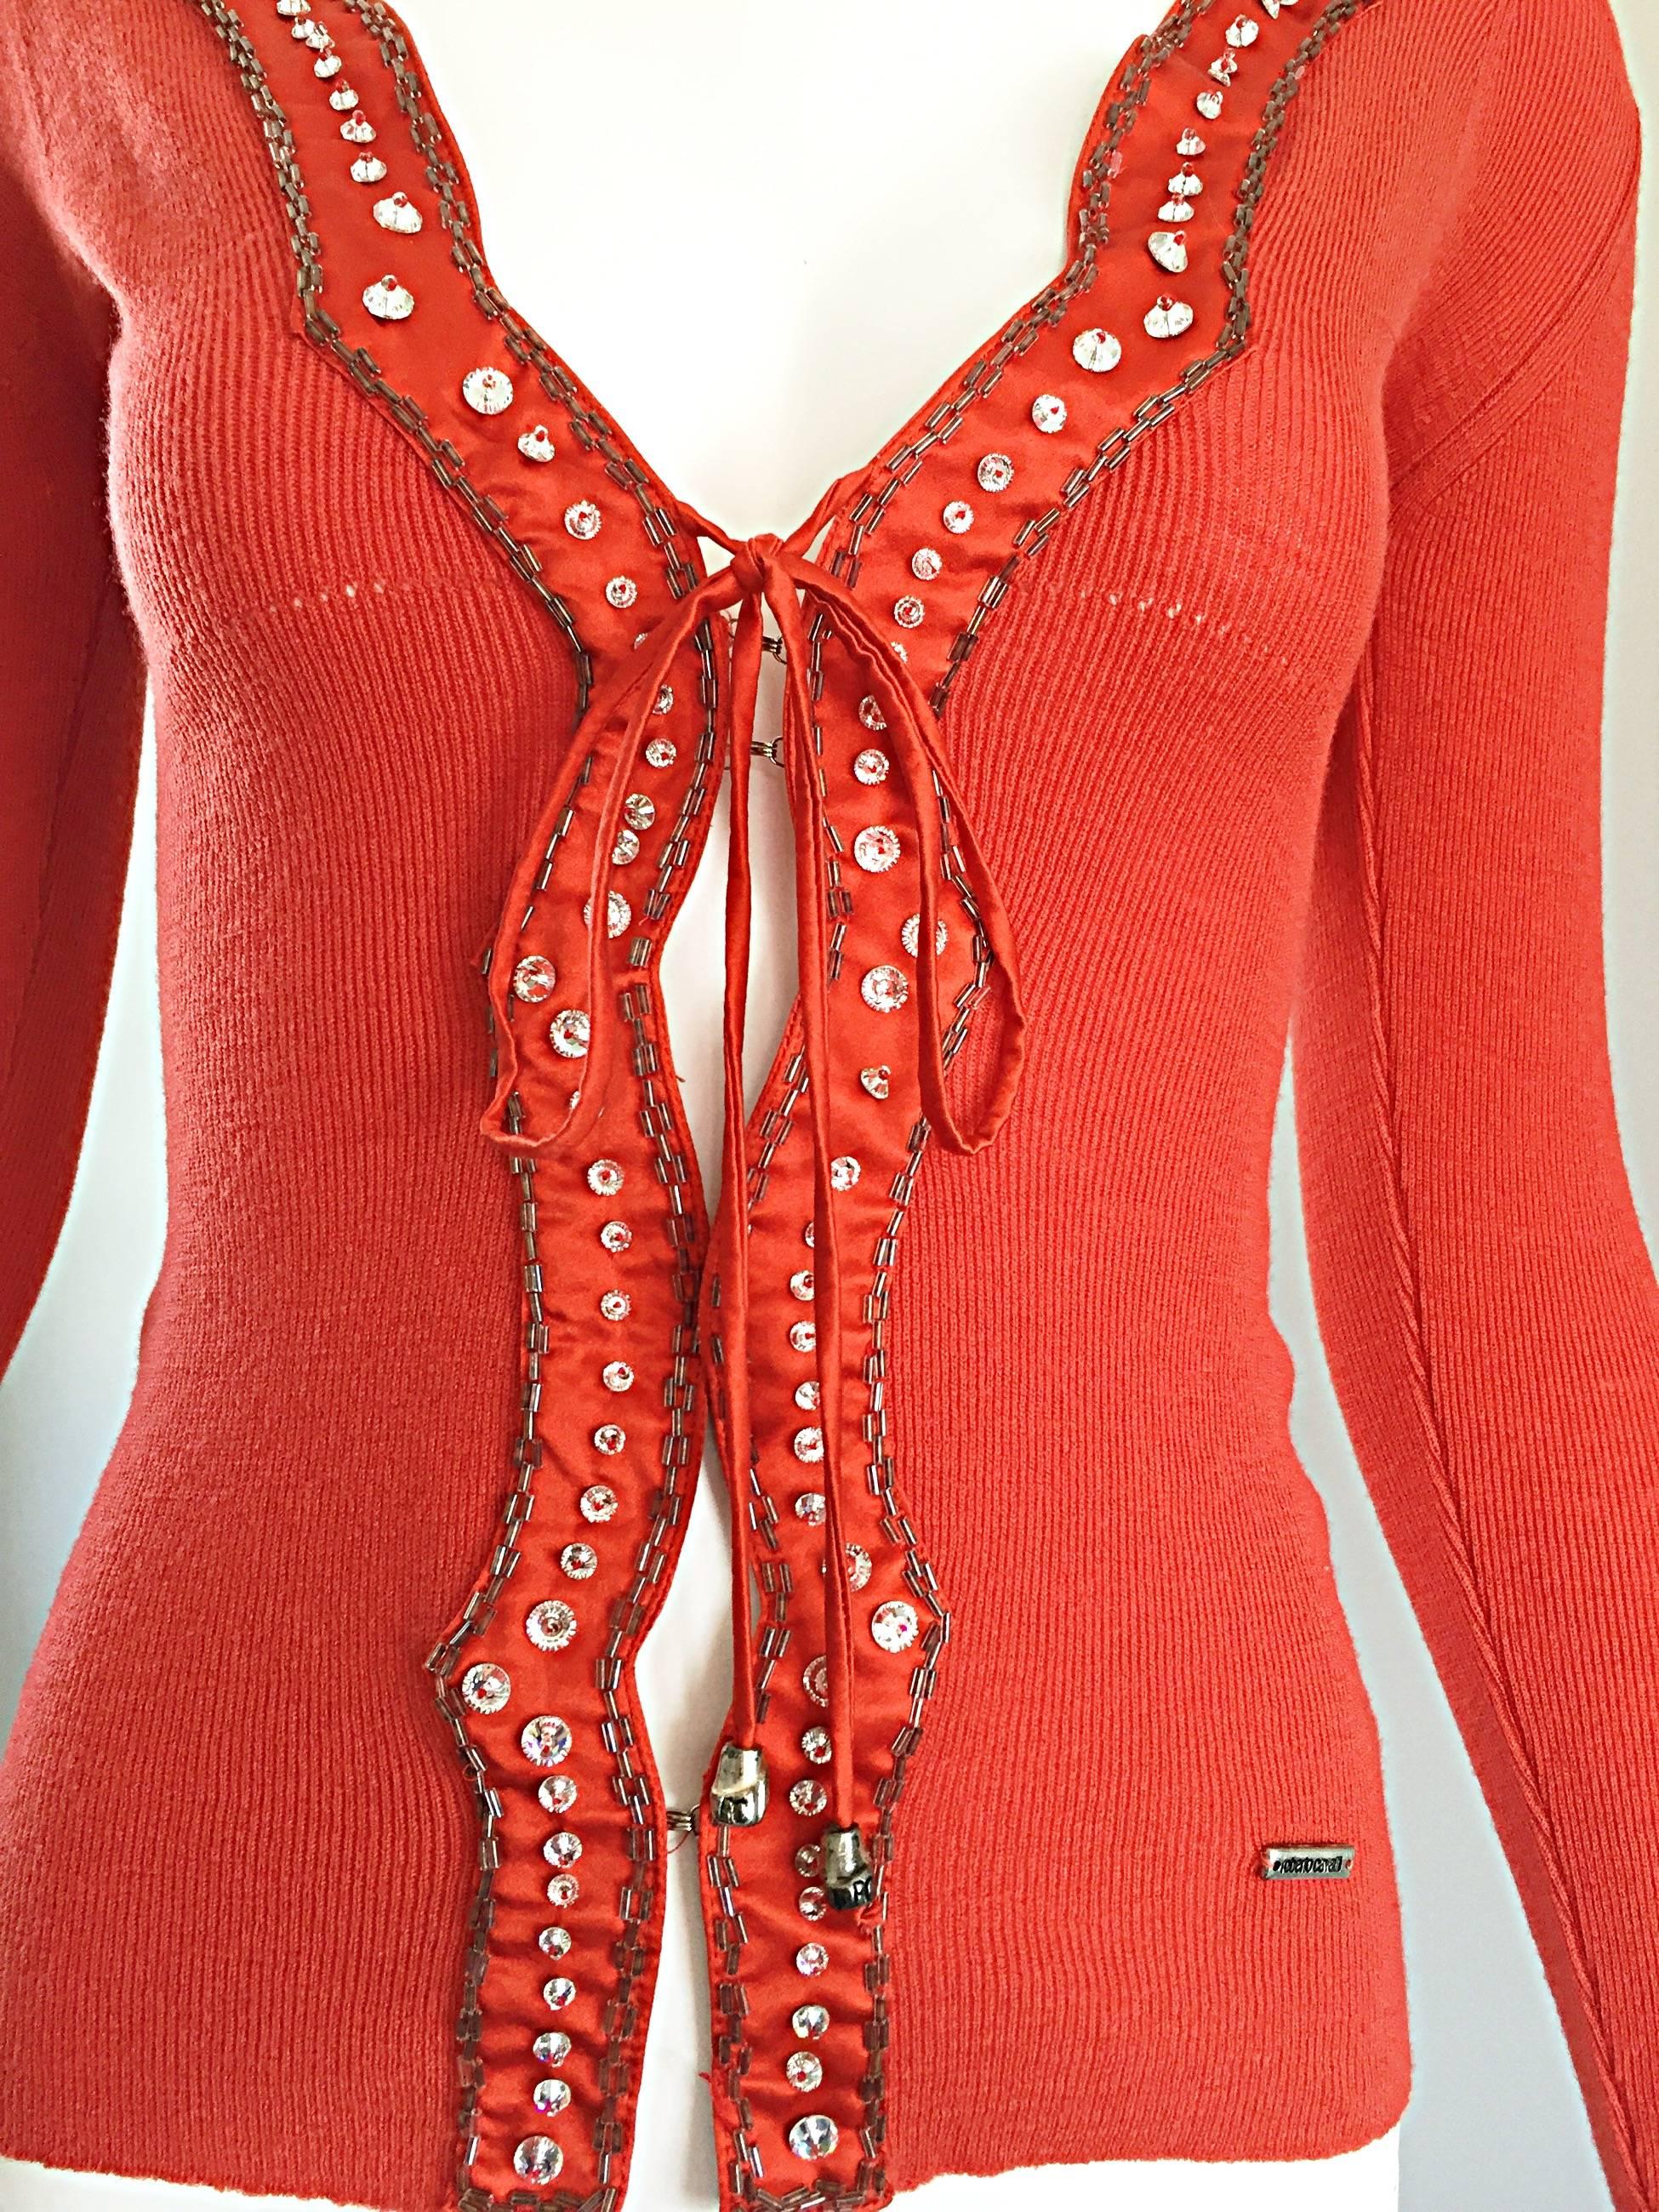 Women's Roberto Cavalli 1990s Burnt Orange Rhinestone + Beaded Vintage Knit Cardigan Top